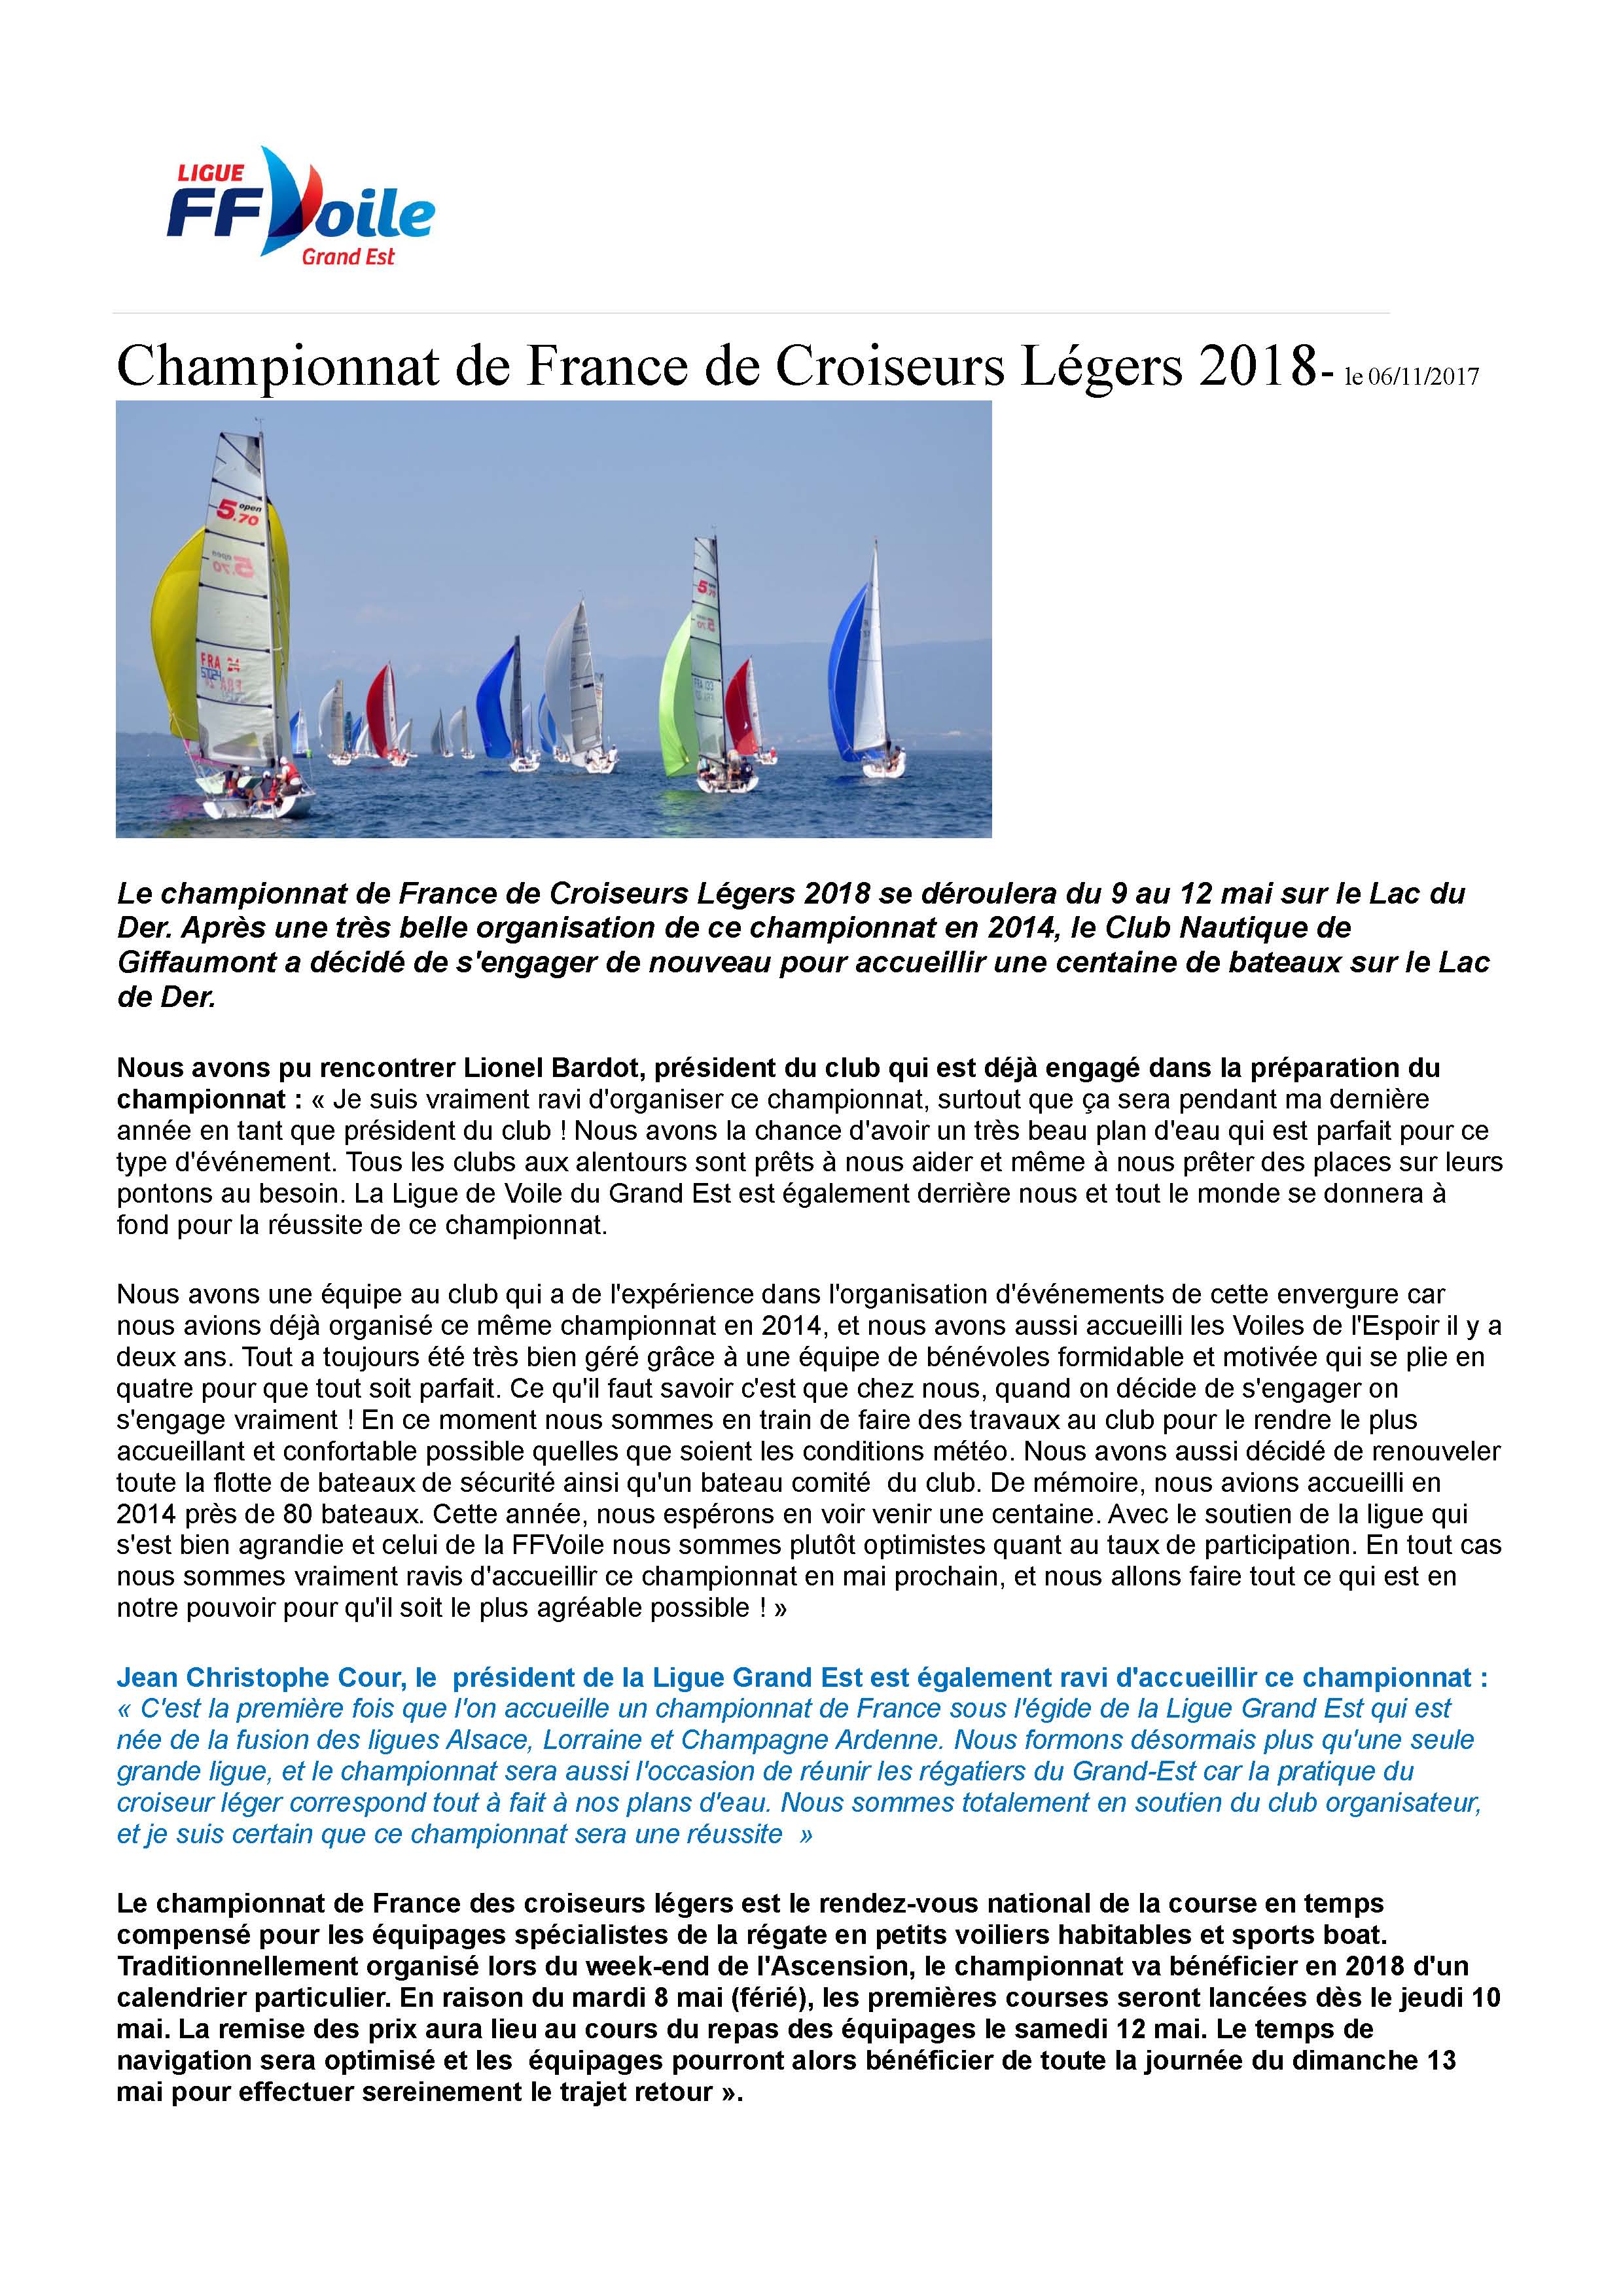 Chpt_France_Croiseurs_2018